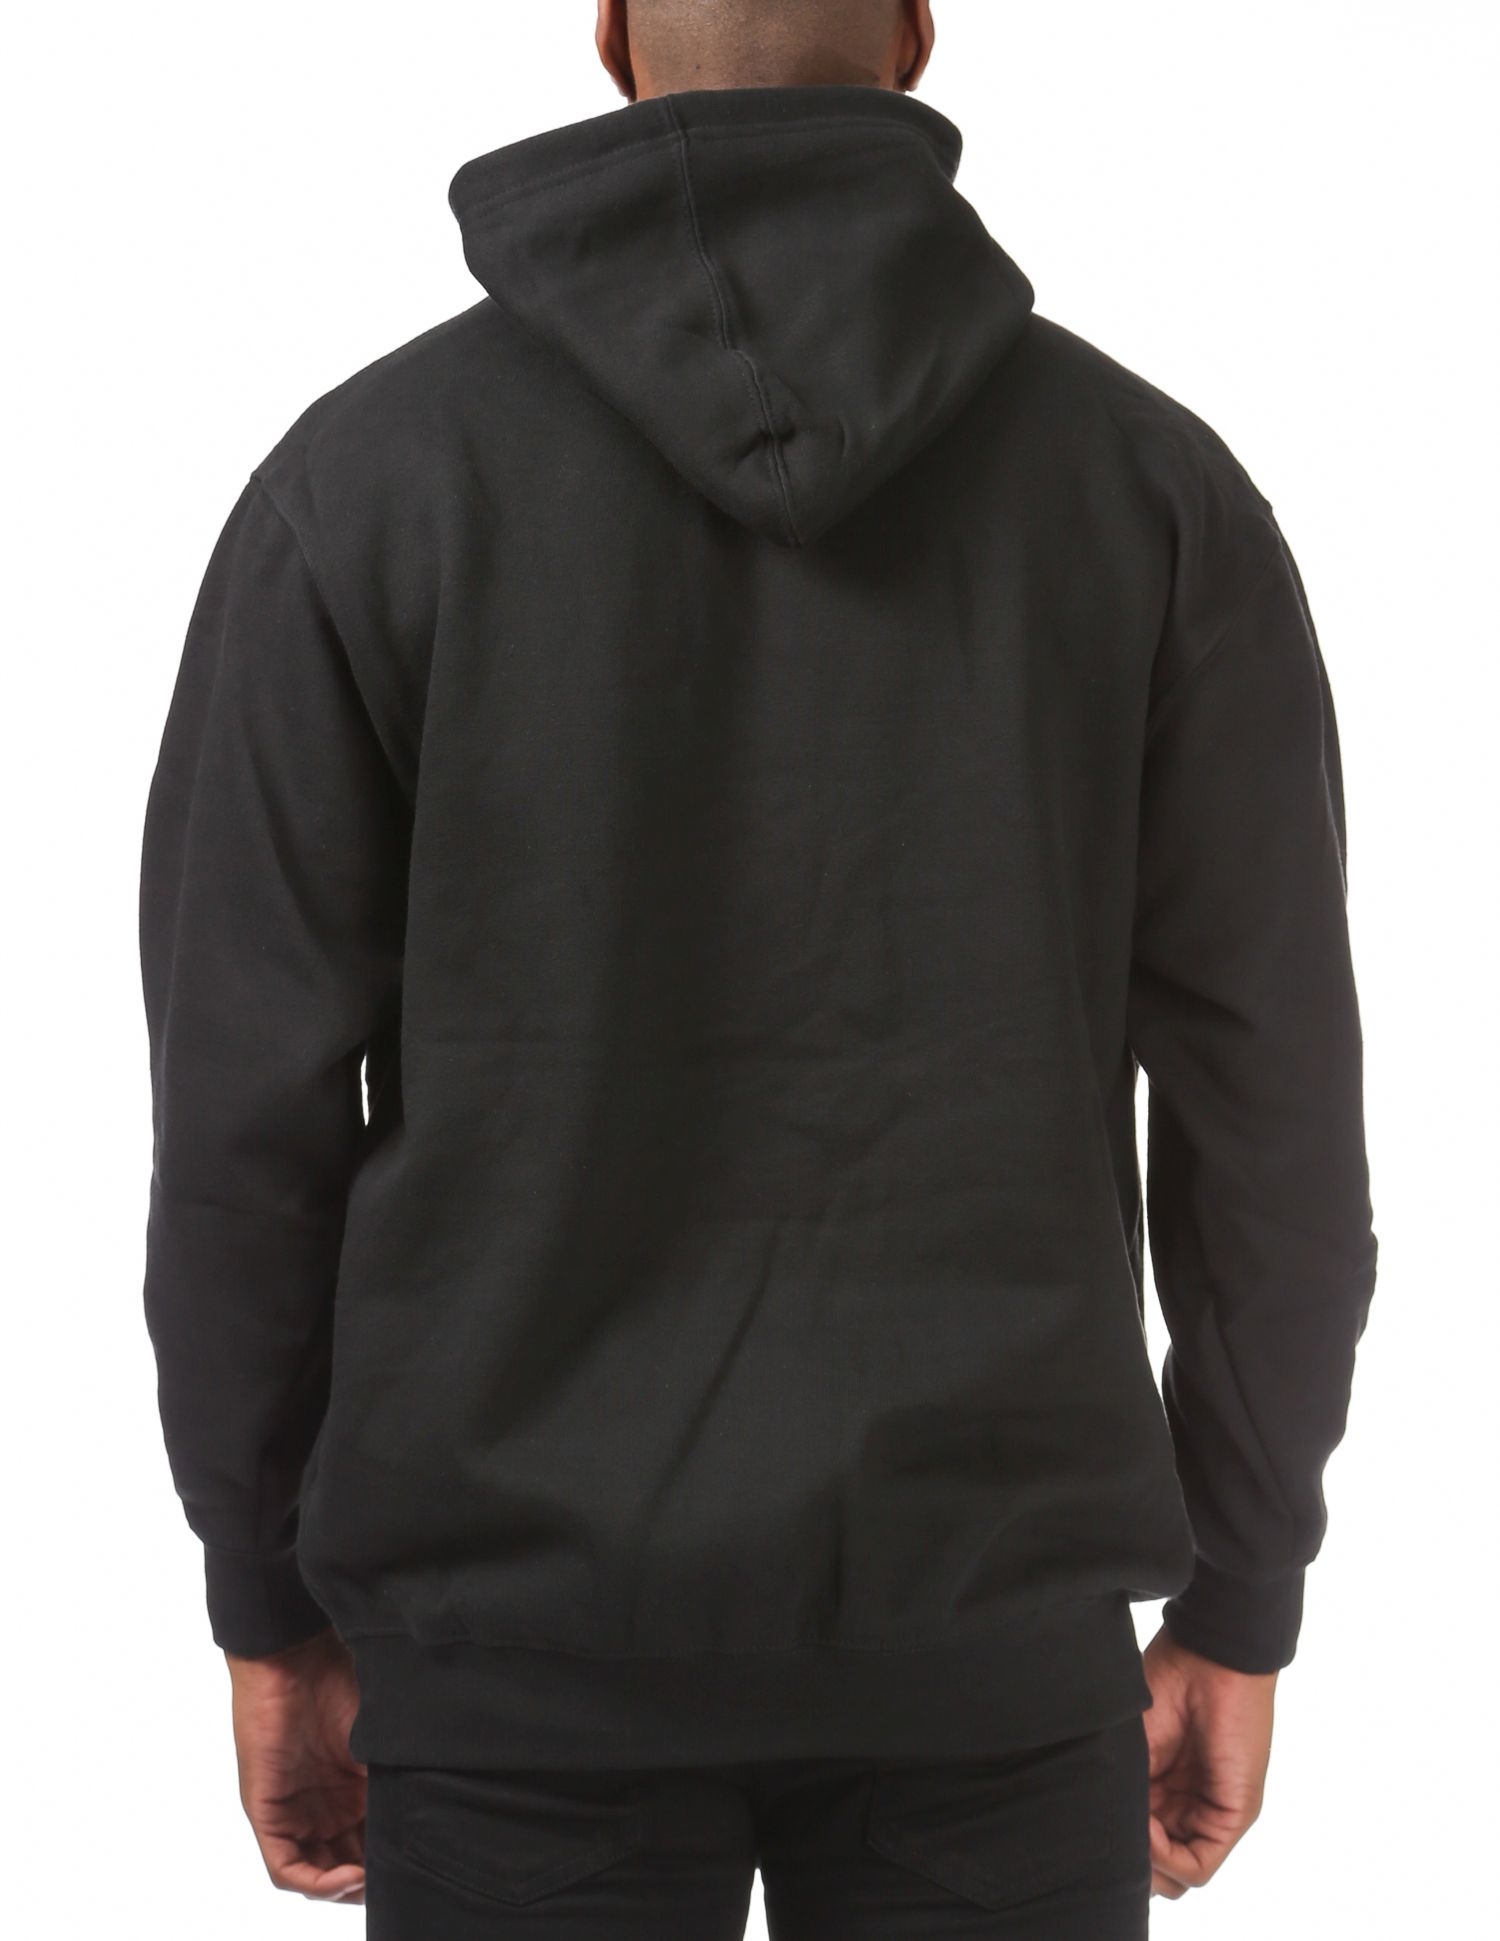 Pro Club Men's Comfort Pullover Hoodie with Front Pocket - Black - Medium